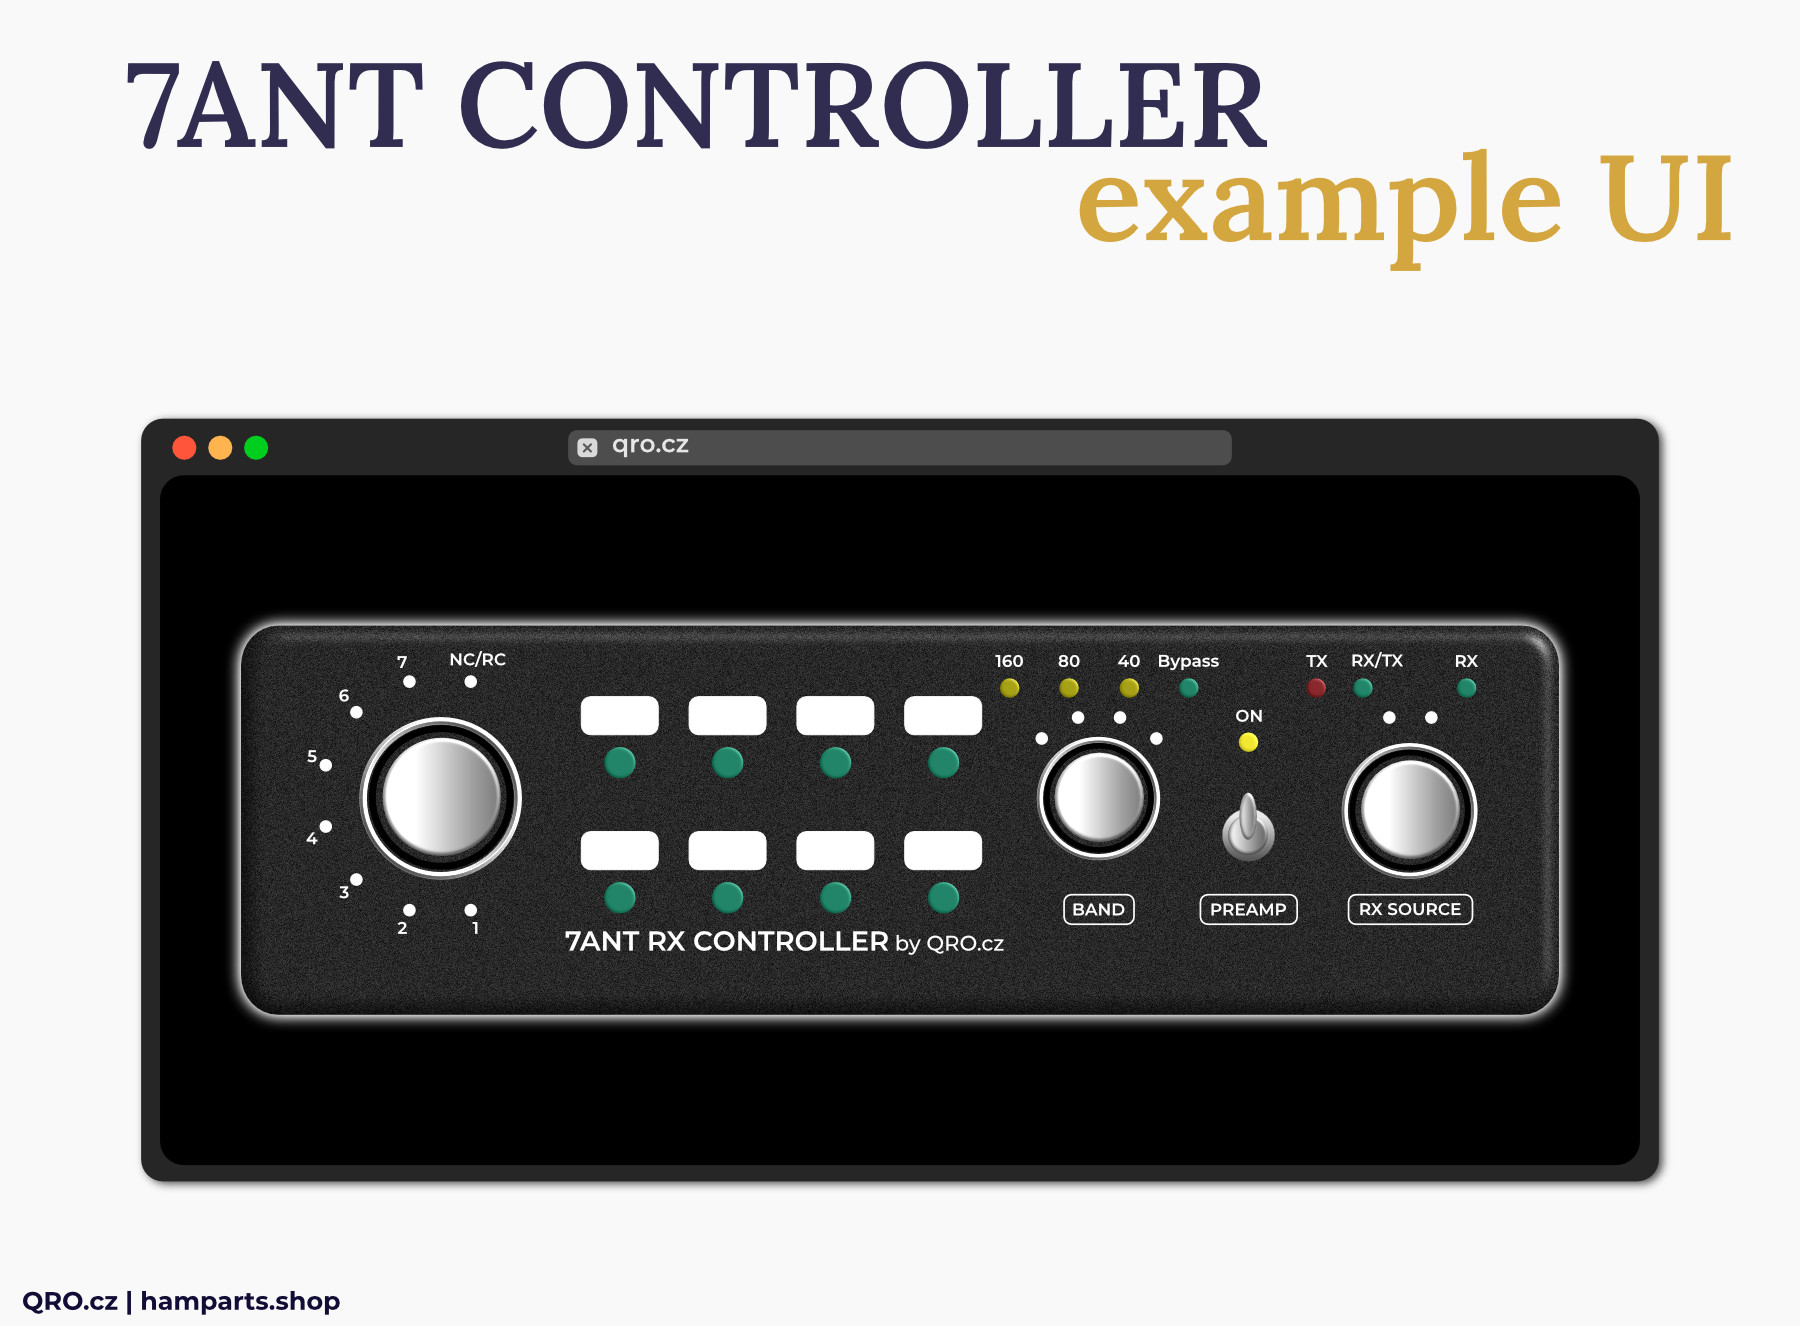 ui example 7ANT controller qro.cz hamparts.shop